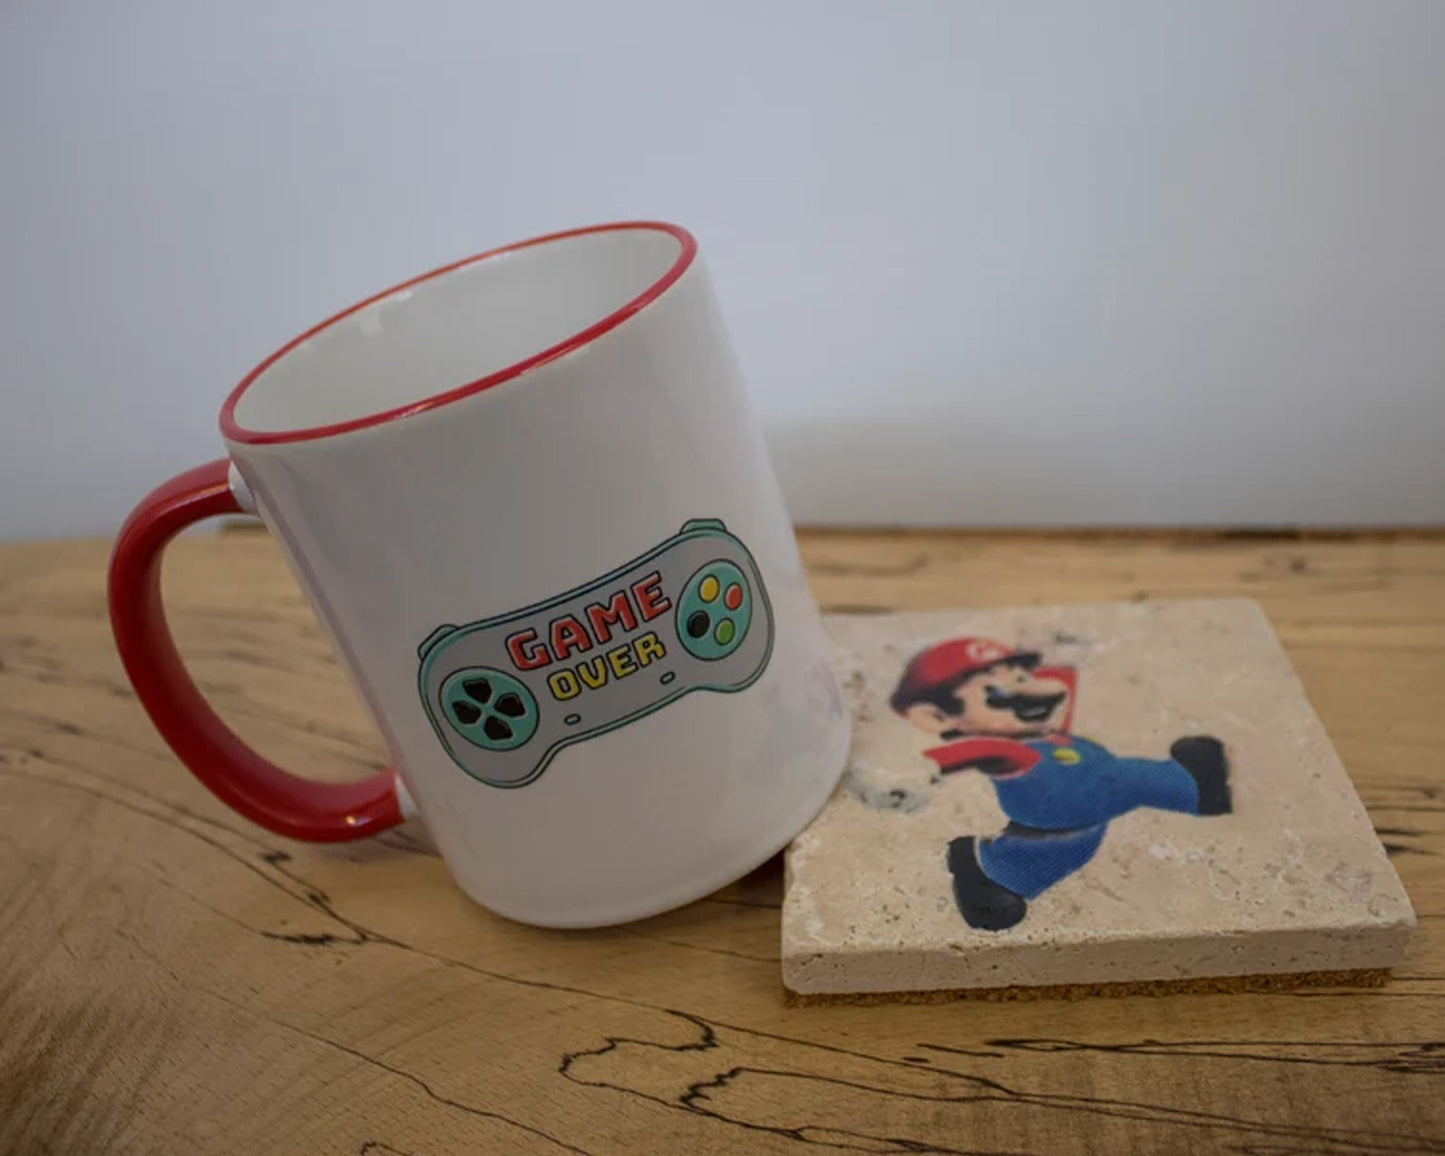 Mario Stone Coasters & Mug Set